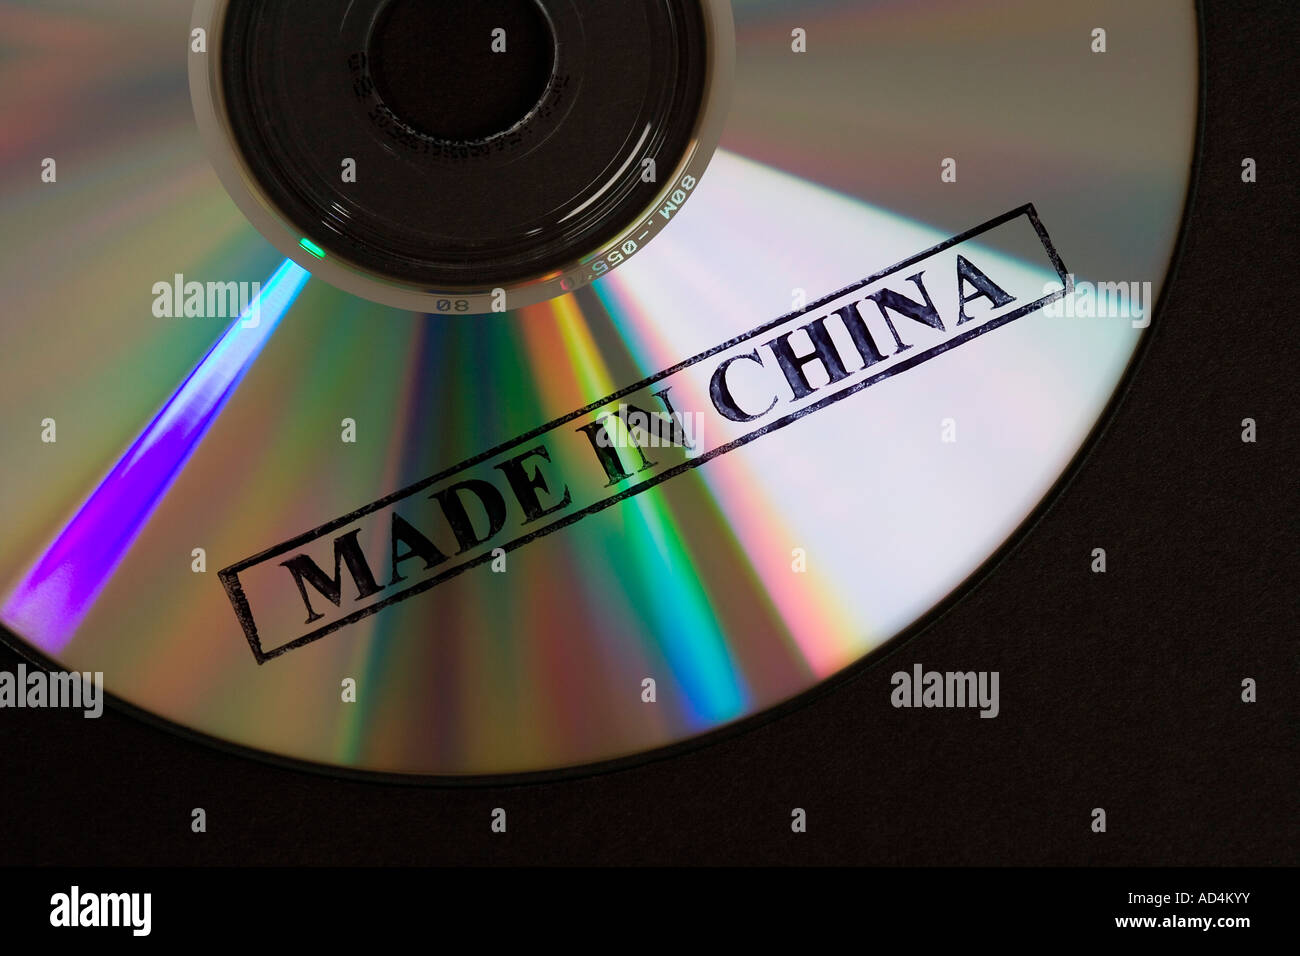 Un CD grabado "Made in China" Foto de stock